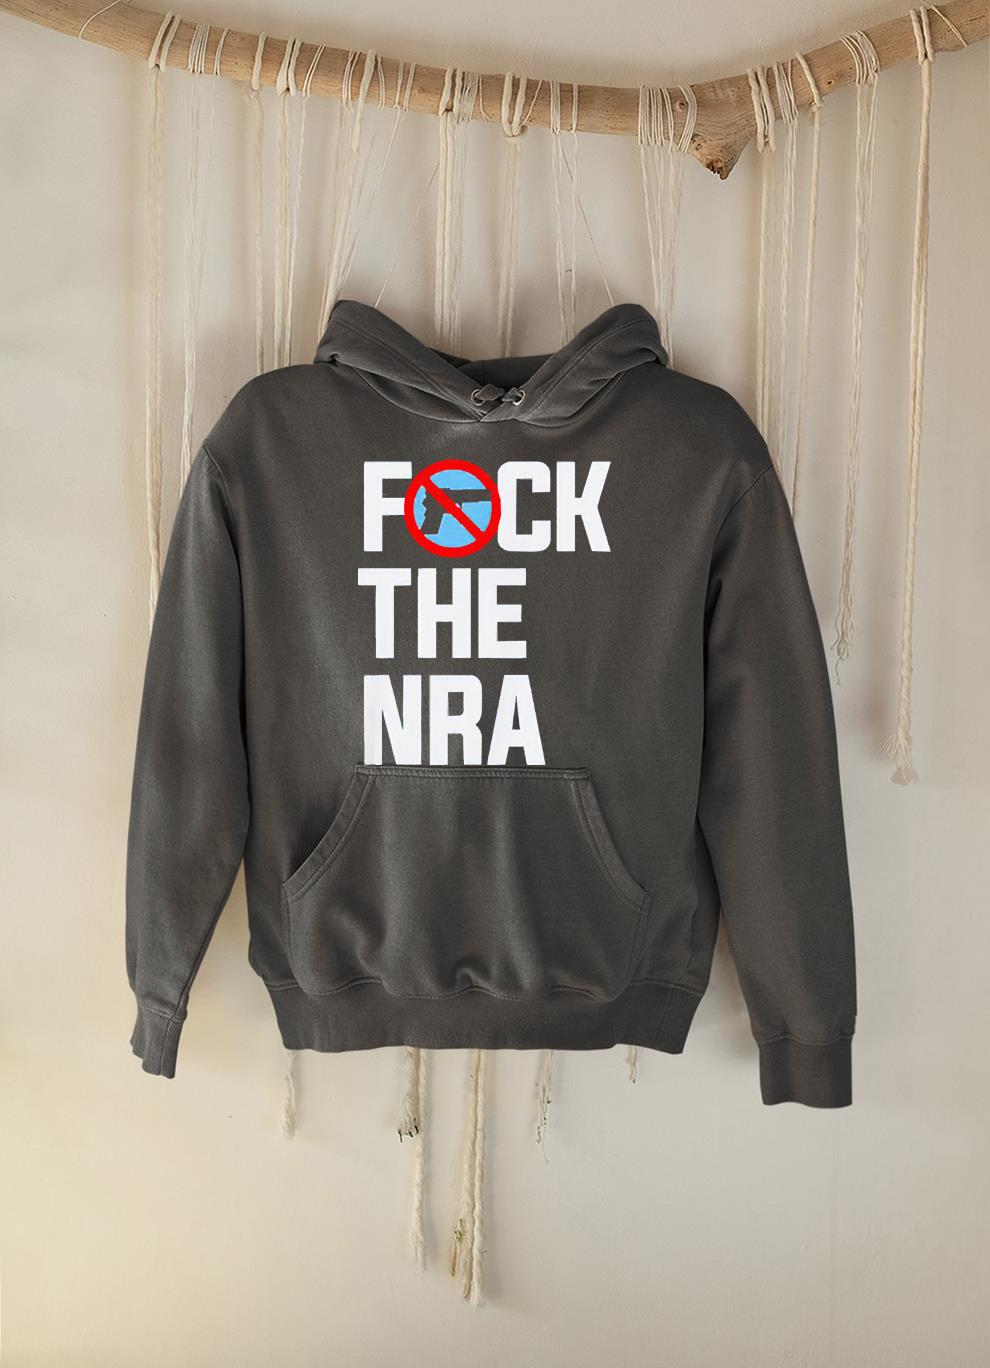 Fuck the NRA no guns shirt